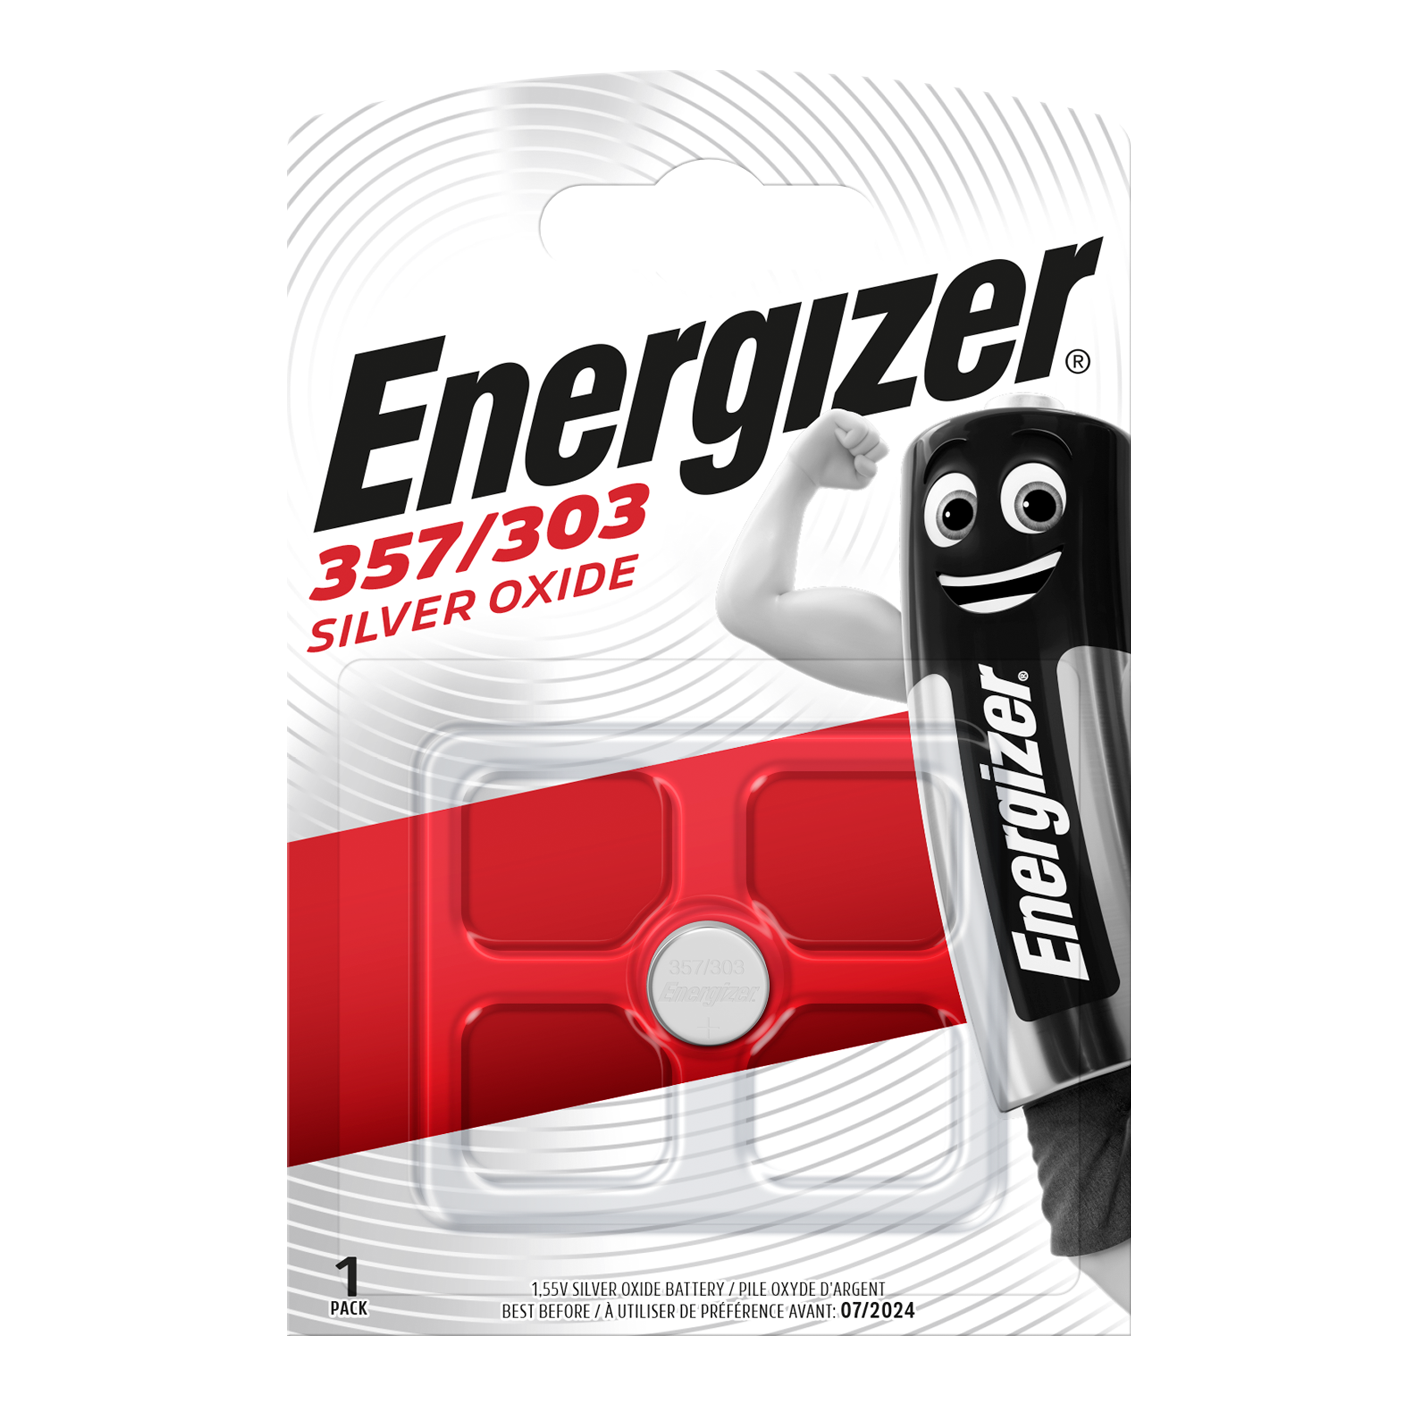 Energizer 357/303 Pila de moneda de óxido de plata, paquete de 1